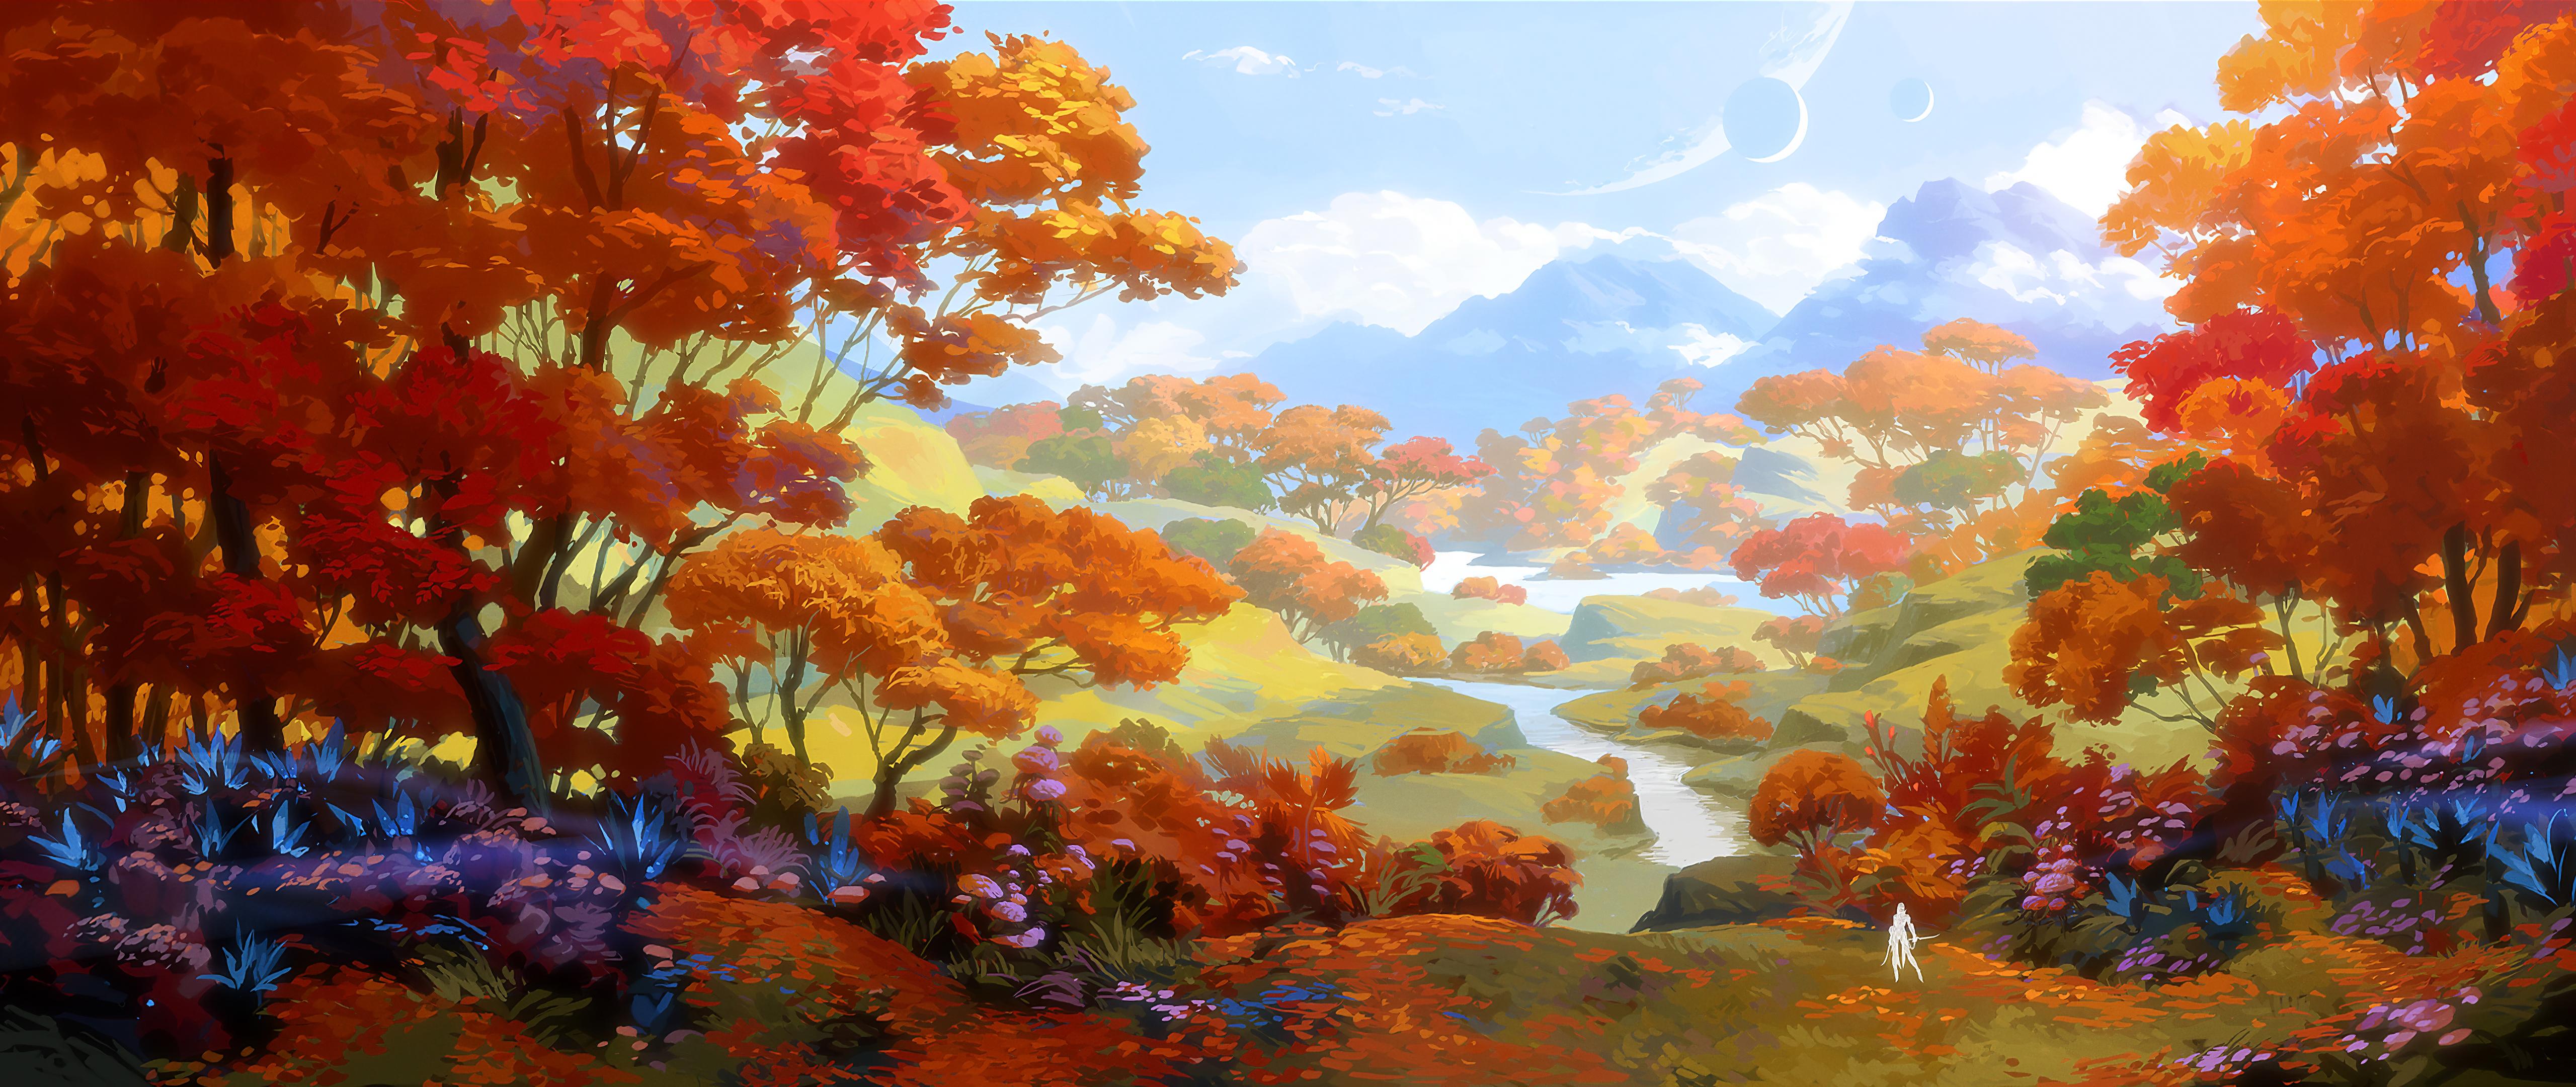 Autumn Trees 5k Wallpaper,HD Artist Wallpapers,4k Wallpapers,Images